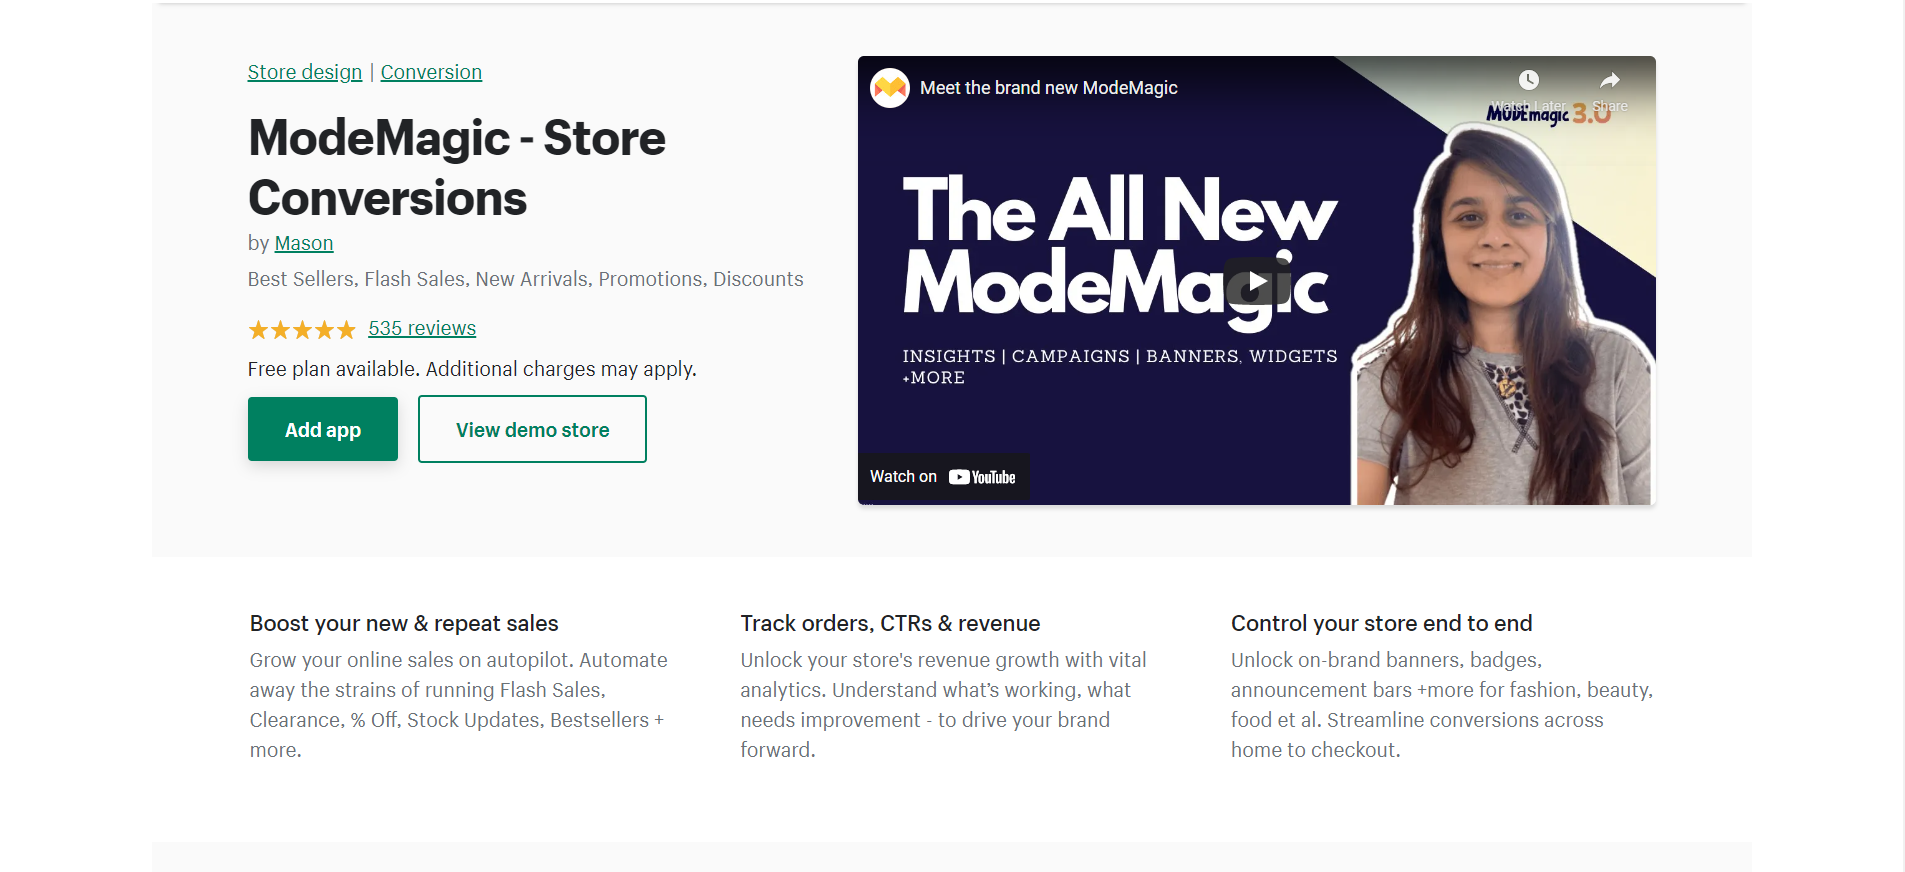 ModeMagic - Store Conversions